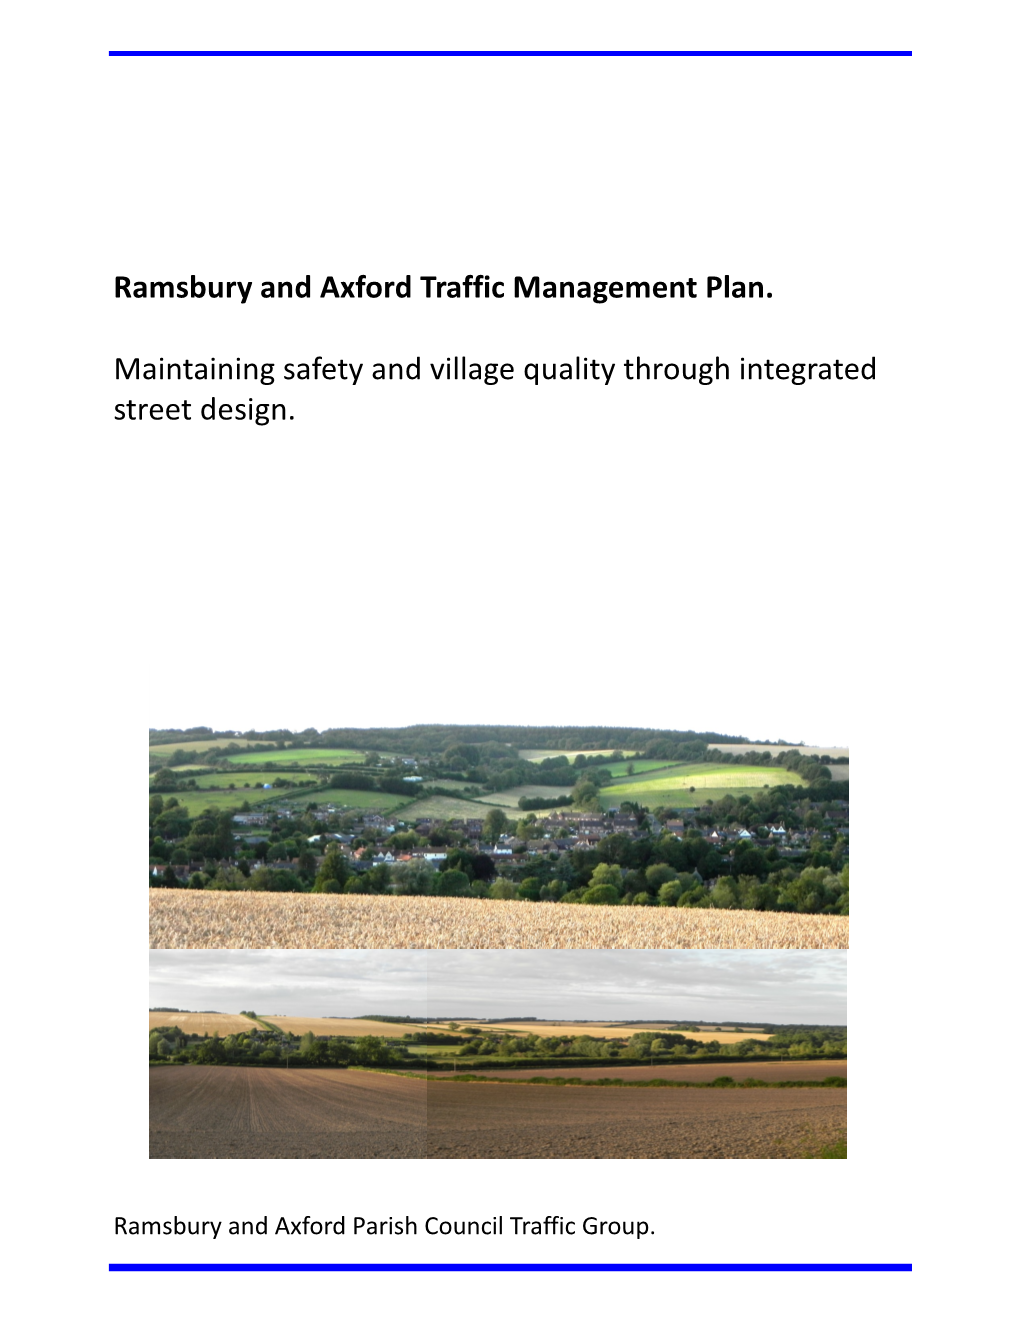 Ramsbury and Axford Traffic Management Plan. Maintaining